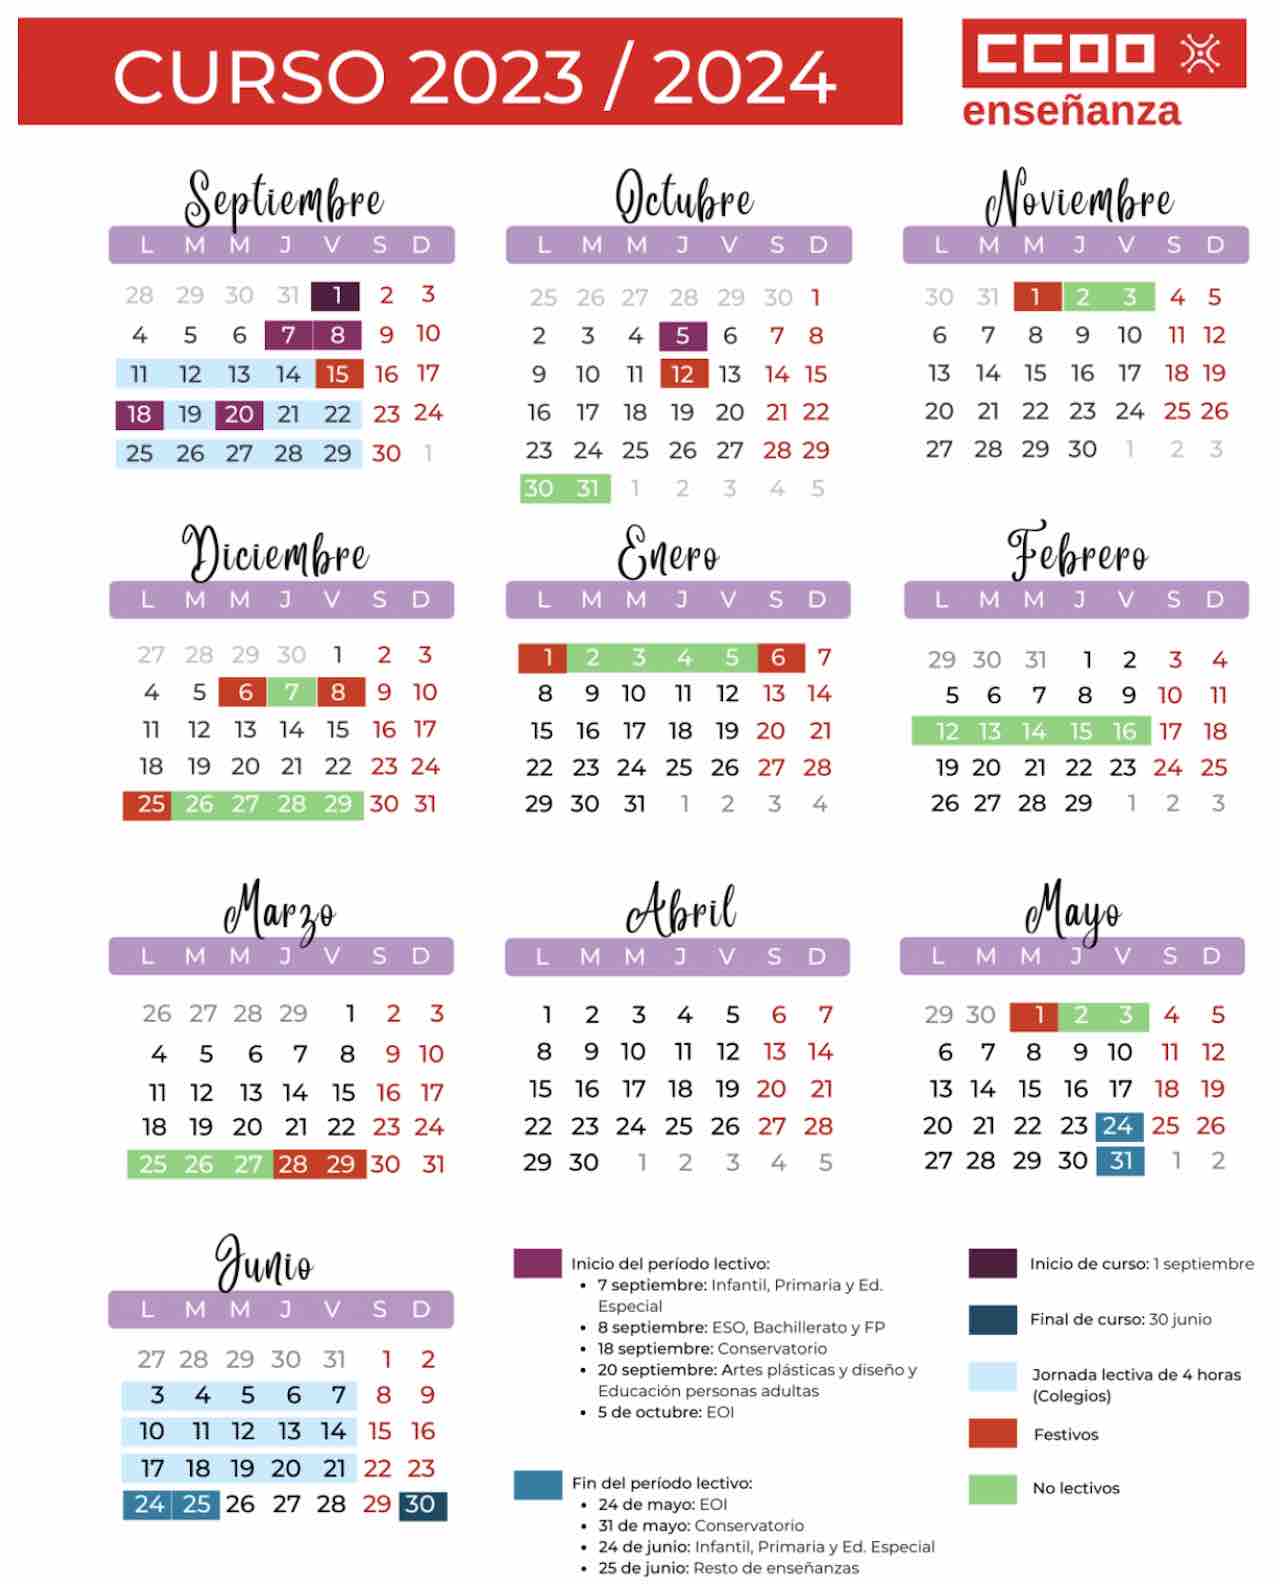 Festivo Pais Vasco 2023 Calendario Escolar País en Vasco 2023 – 2024